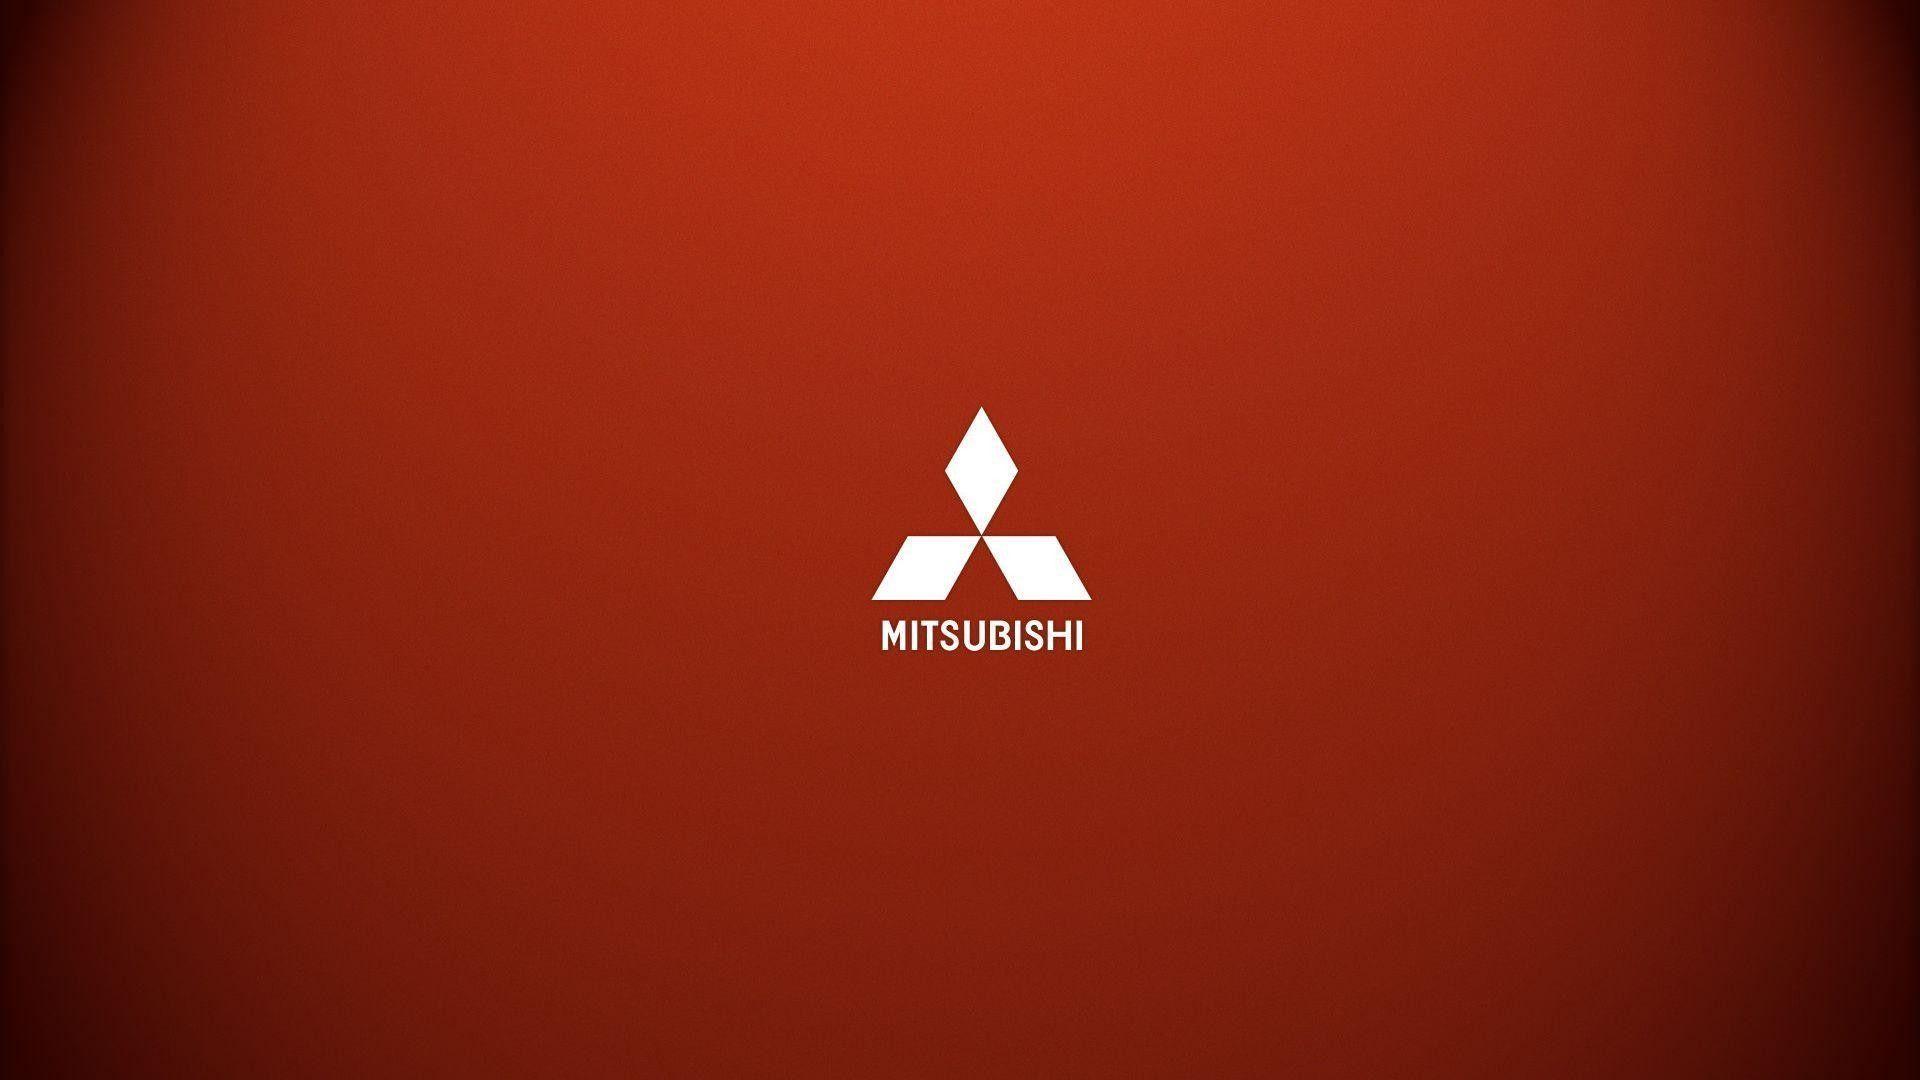 Mitsubishi Logo Hd Wallpaper Mitsubishi Wallpaper Car Brands Logos ...